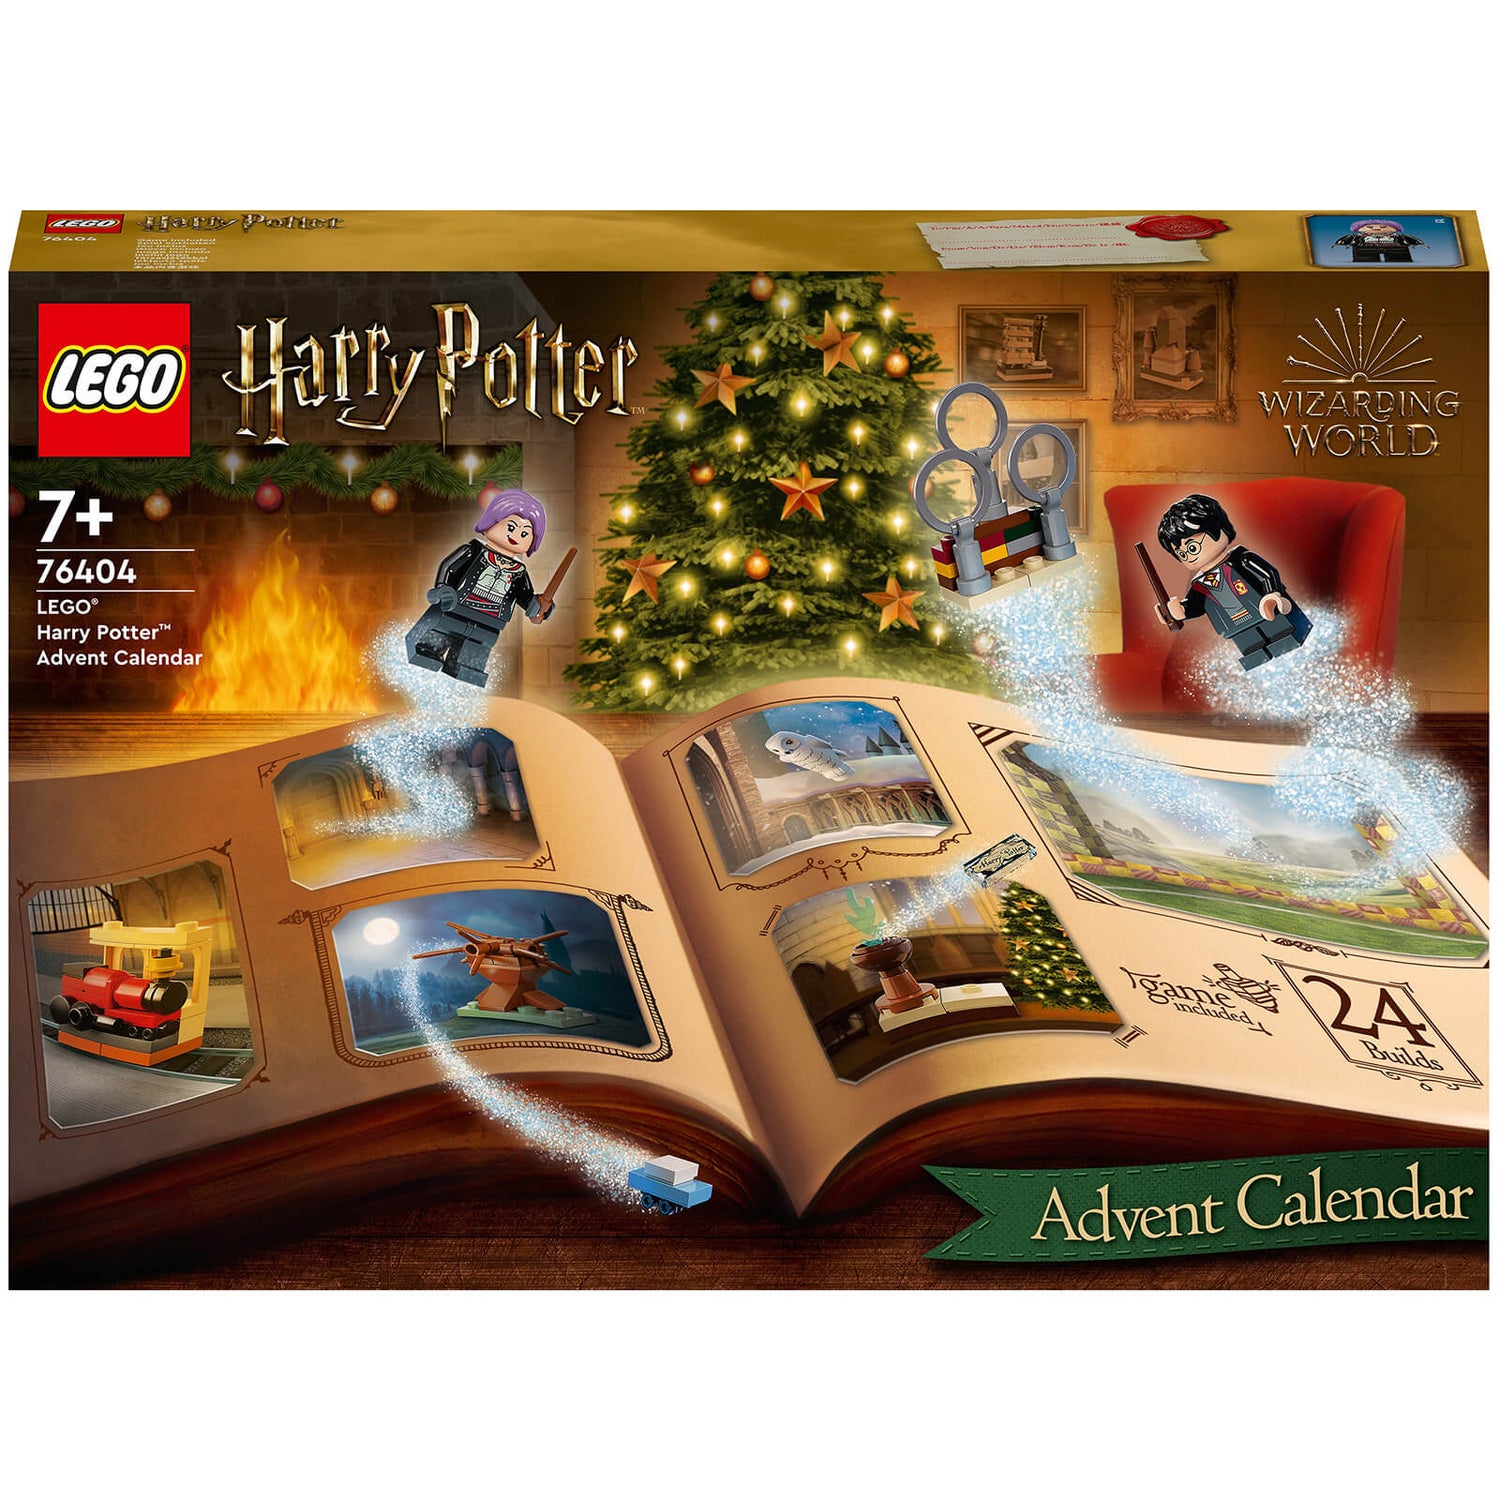 LEGO Harry Potter Adventkalender (76404)